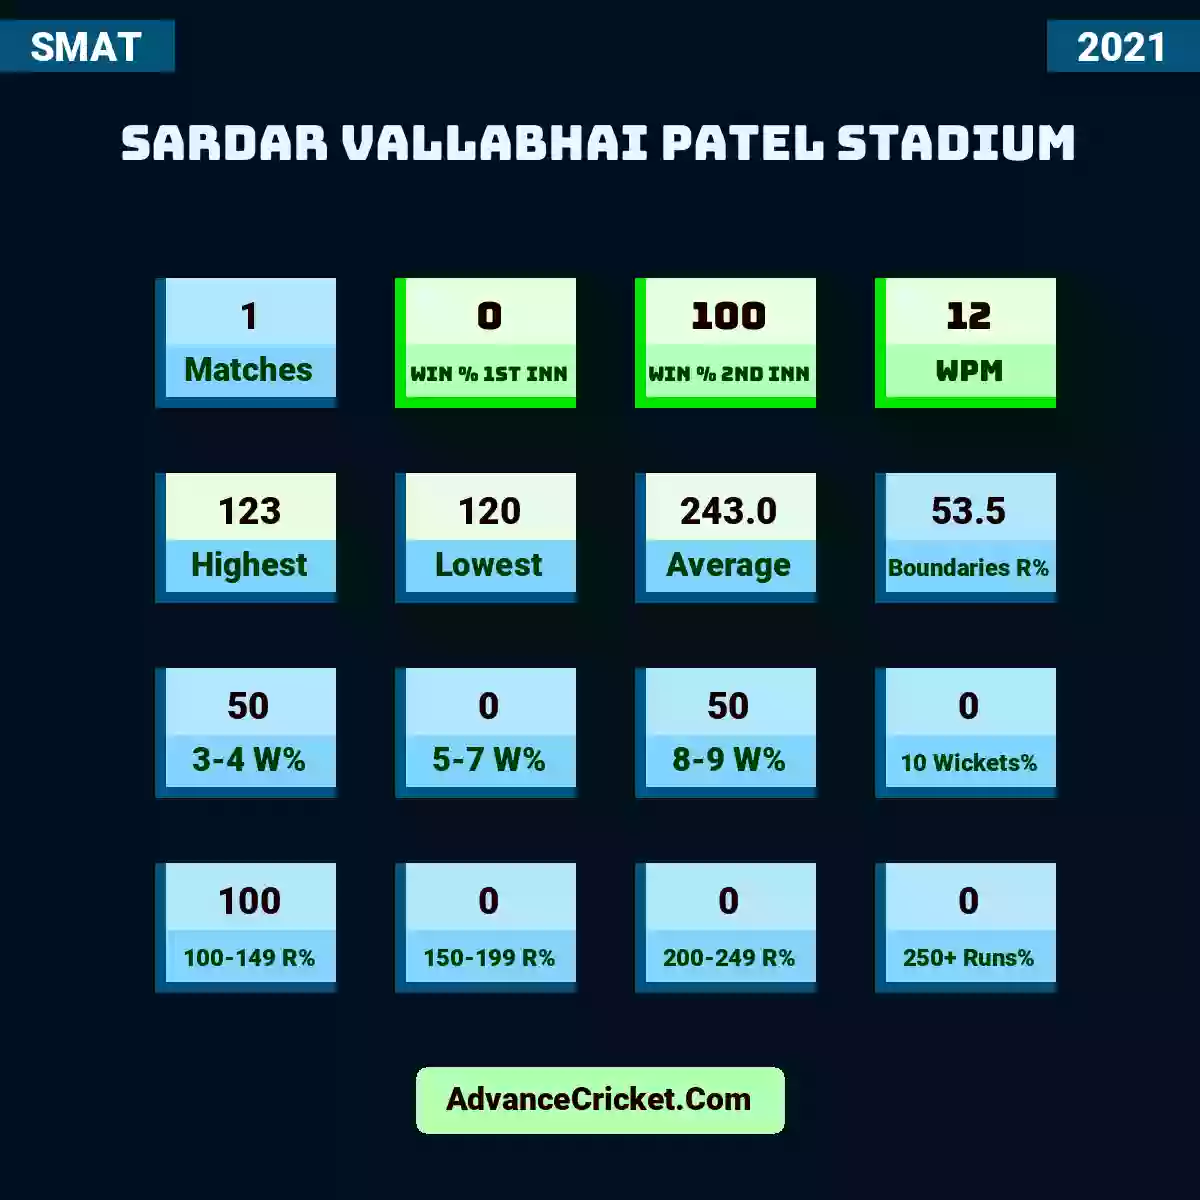 Image showing Sardar Vallabhai Patel Stadium with Matches: 1, Win % 1st Inn: 0, Win % 2nd Inn: 100, WPM: 12, Highest: 123, Lowest: 120, Average: 243.0, Boundaries R%: 53.5, 3-4 W%: 50, 5-7 W%: 0, 8-9 W%: 50, 10 Wickets%: 0, 100-149 R%: 100, 150-199 R%: 0, 200-249 R%: 0, 250+ Runs%: 0.